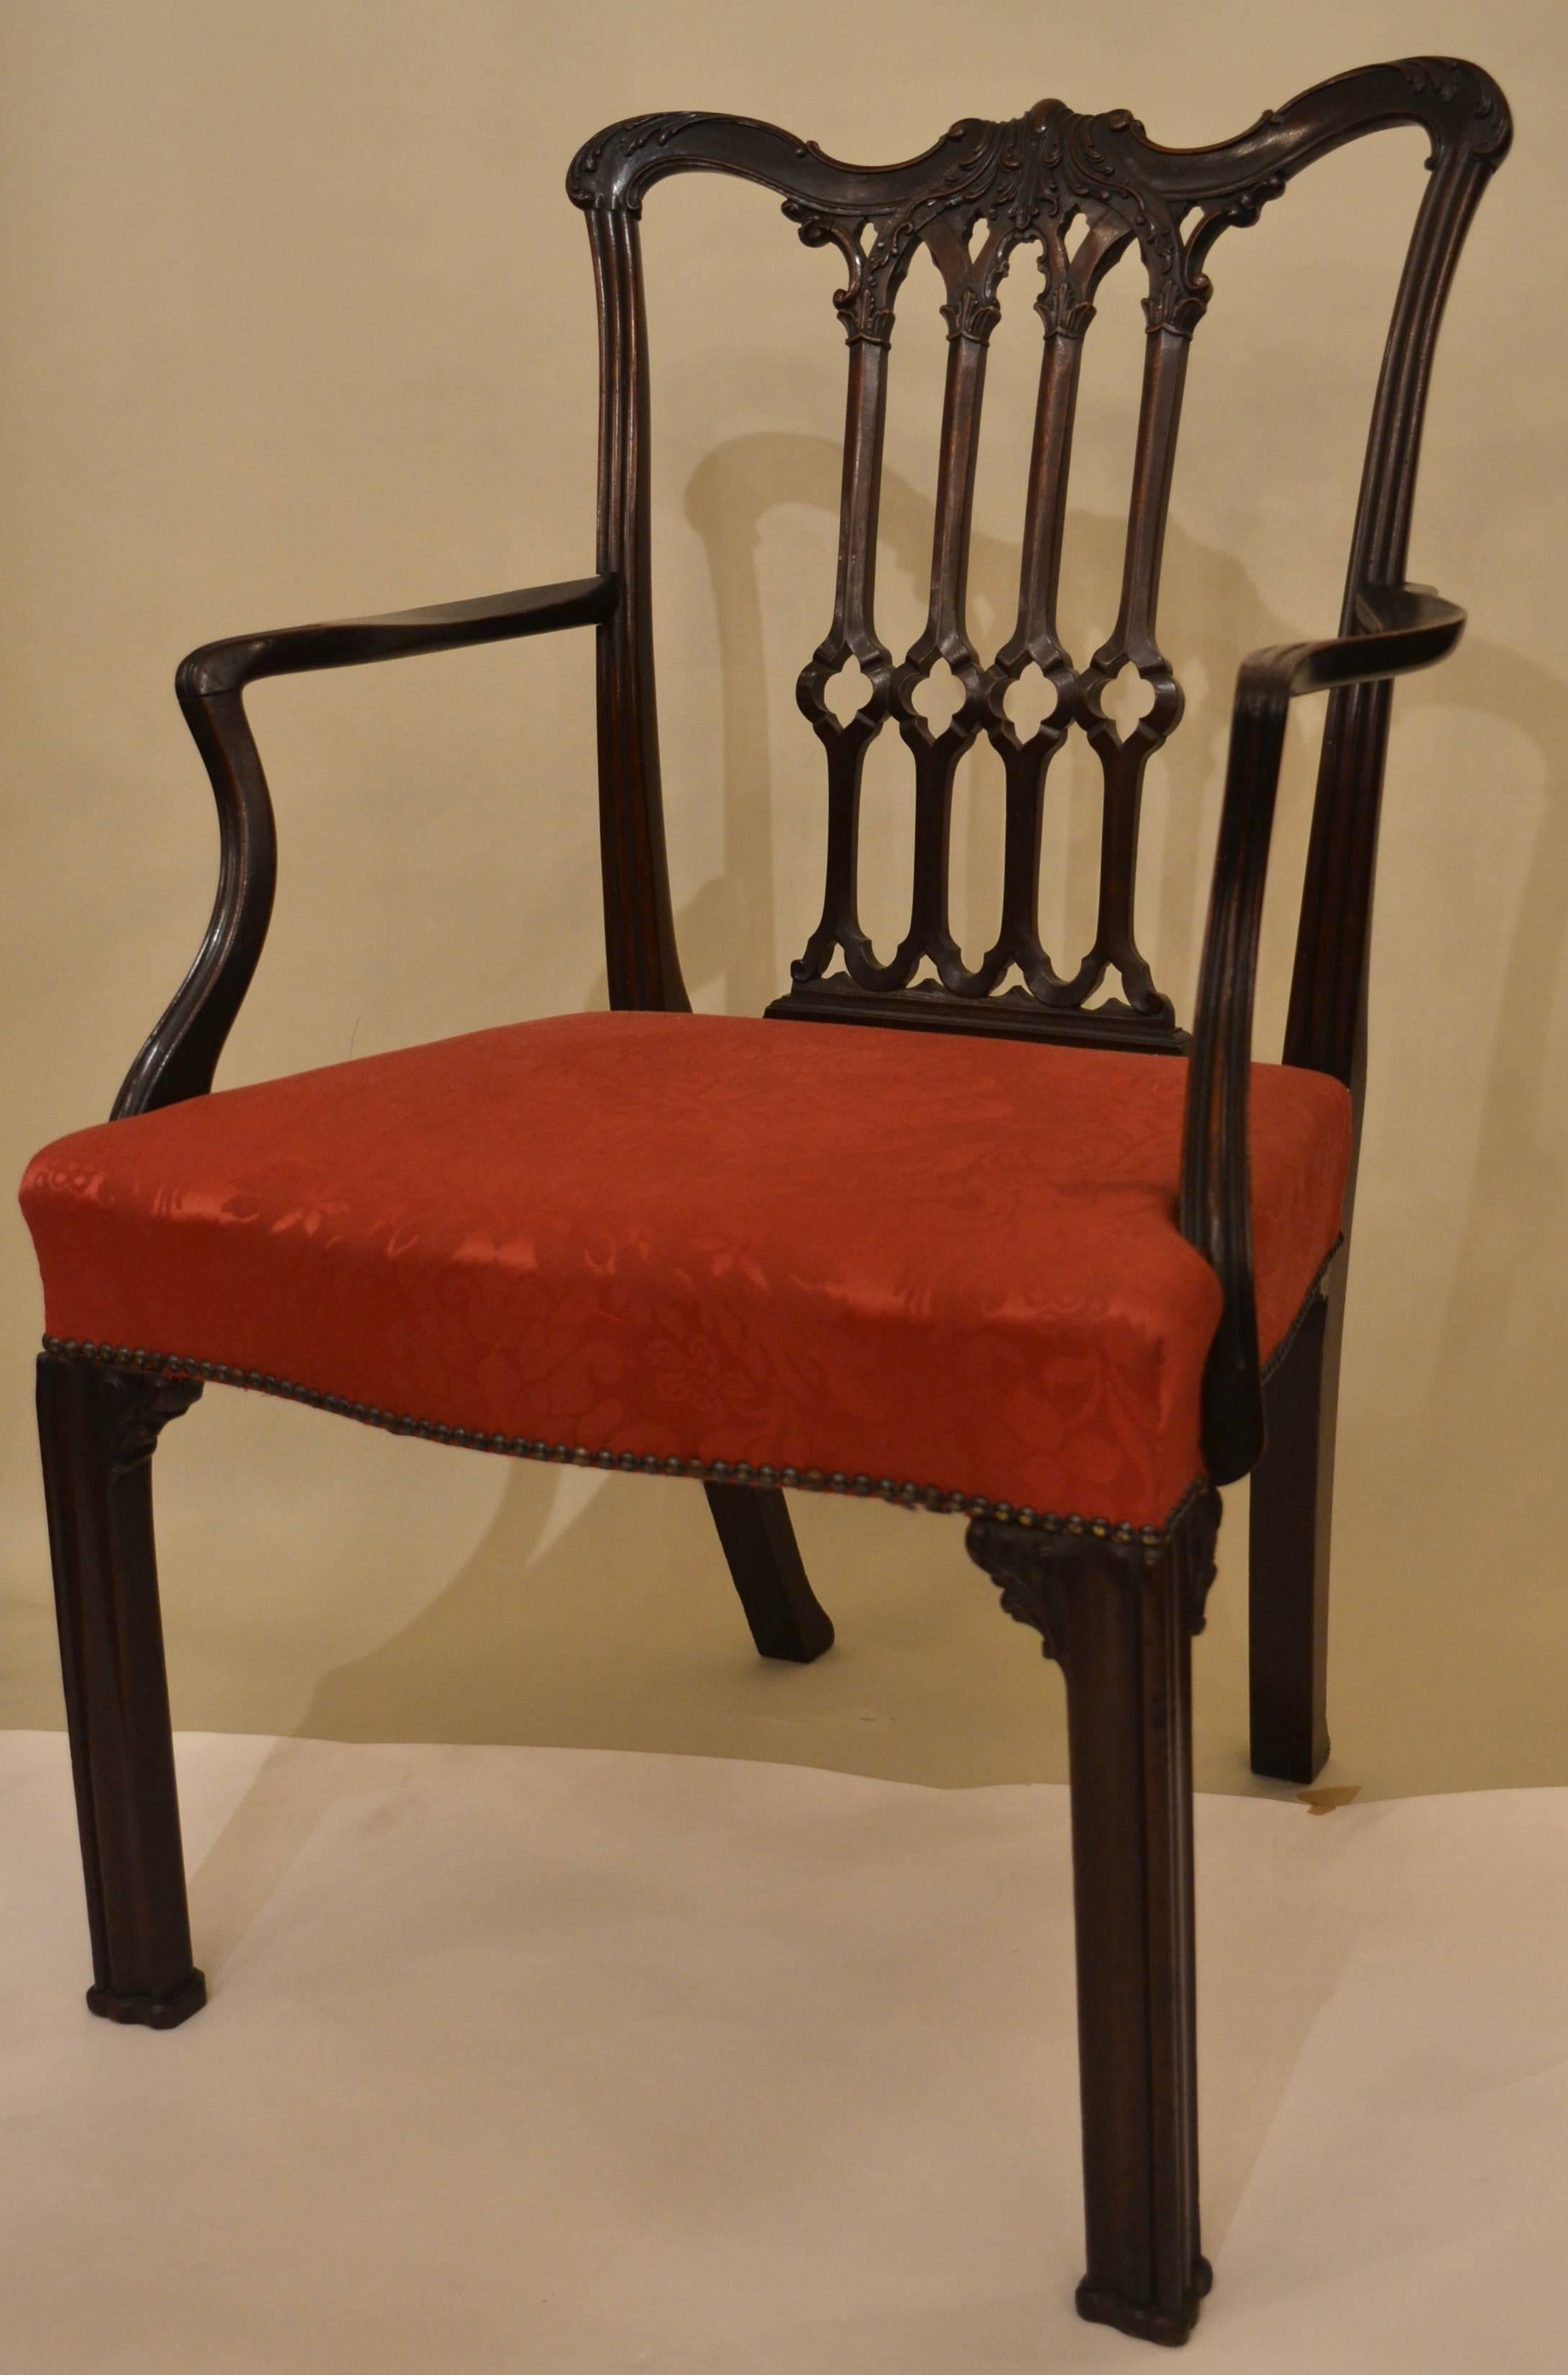 A nice example of a Georgian period armchair.